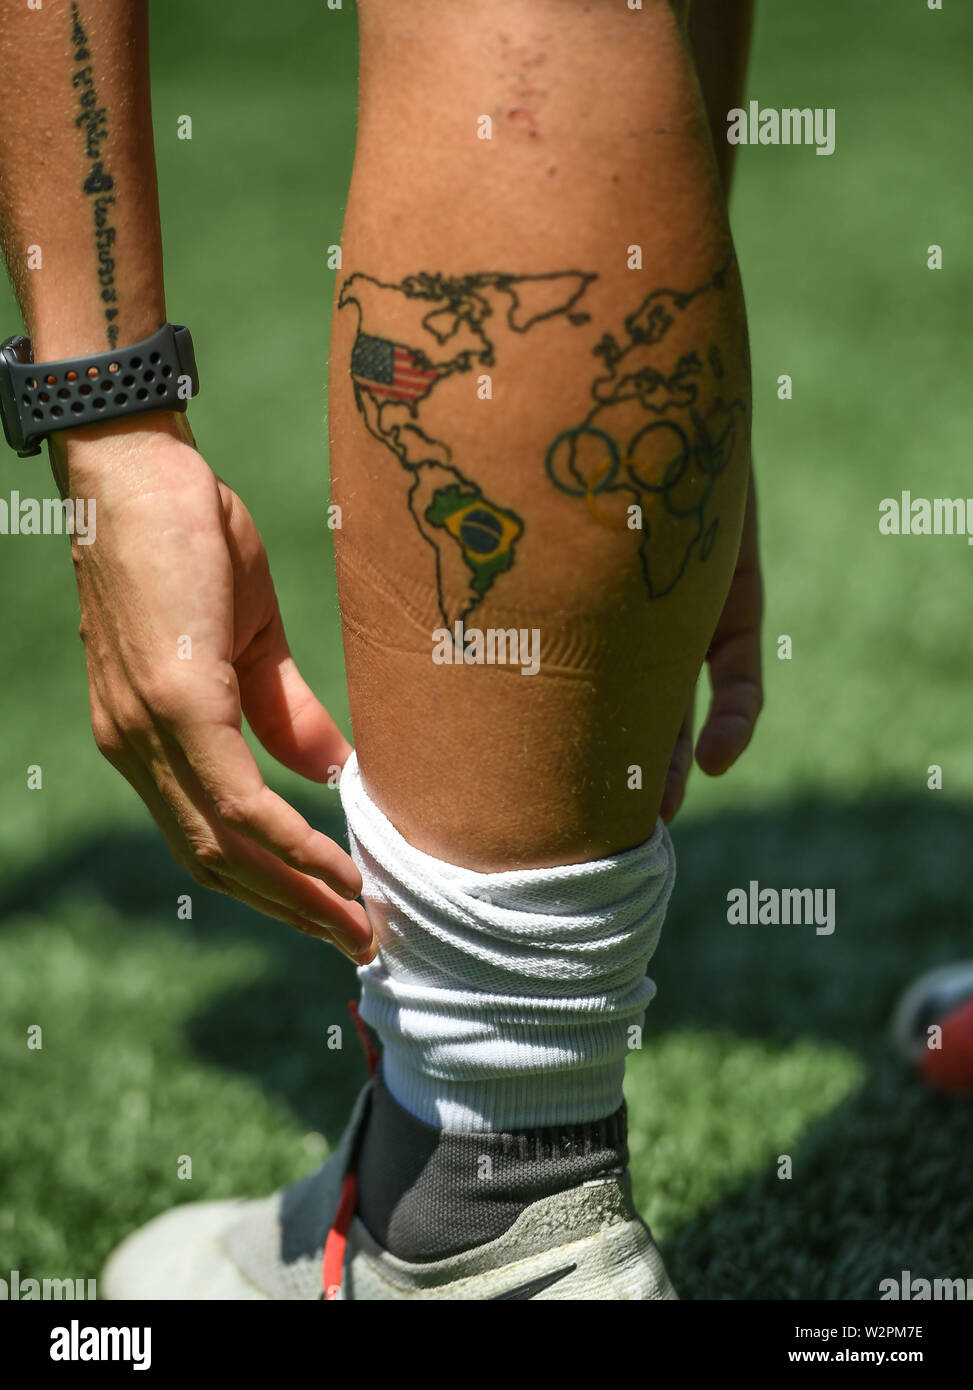 Brazil Tattoo for nick | Tattoos, Tattoo designs, Tattoos and piercings